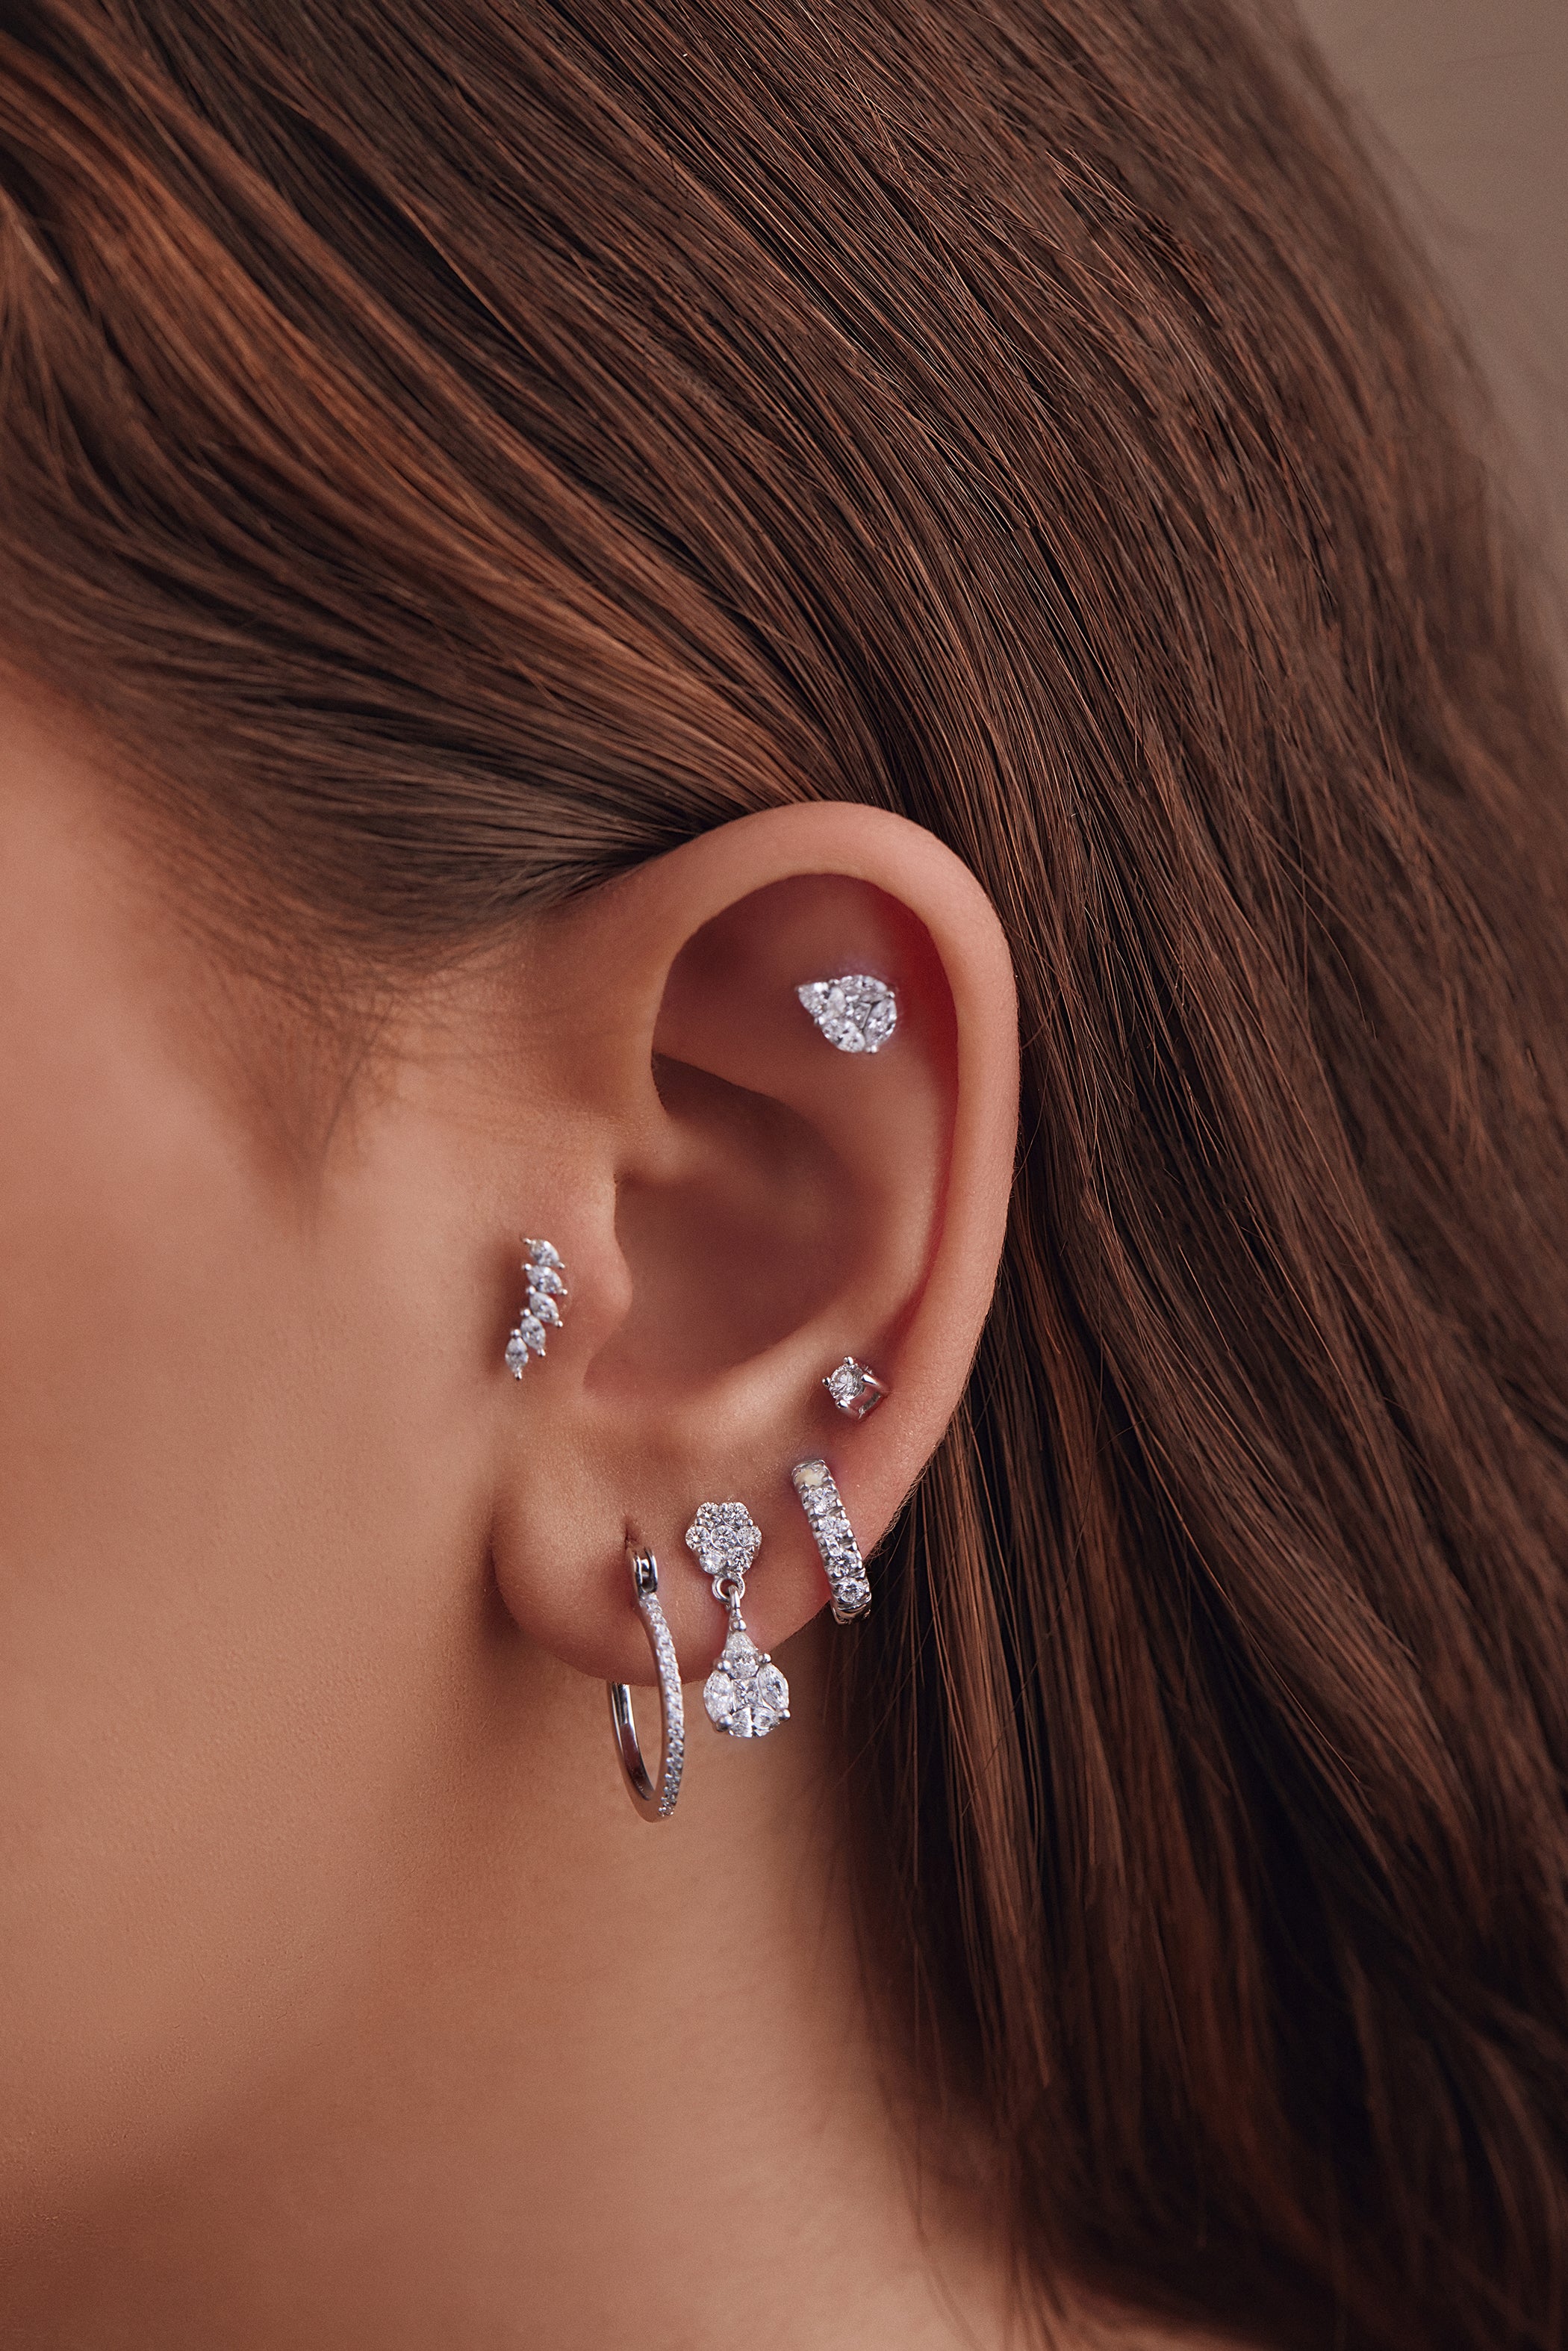 Droplet Diamond Earrings in 18K White Gold